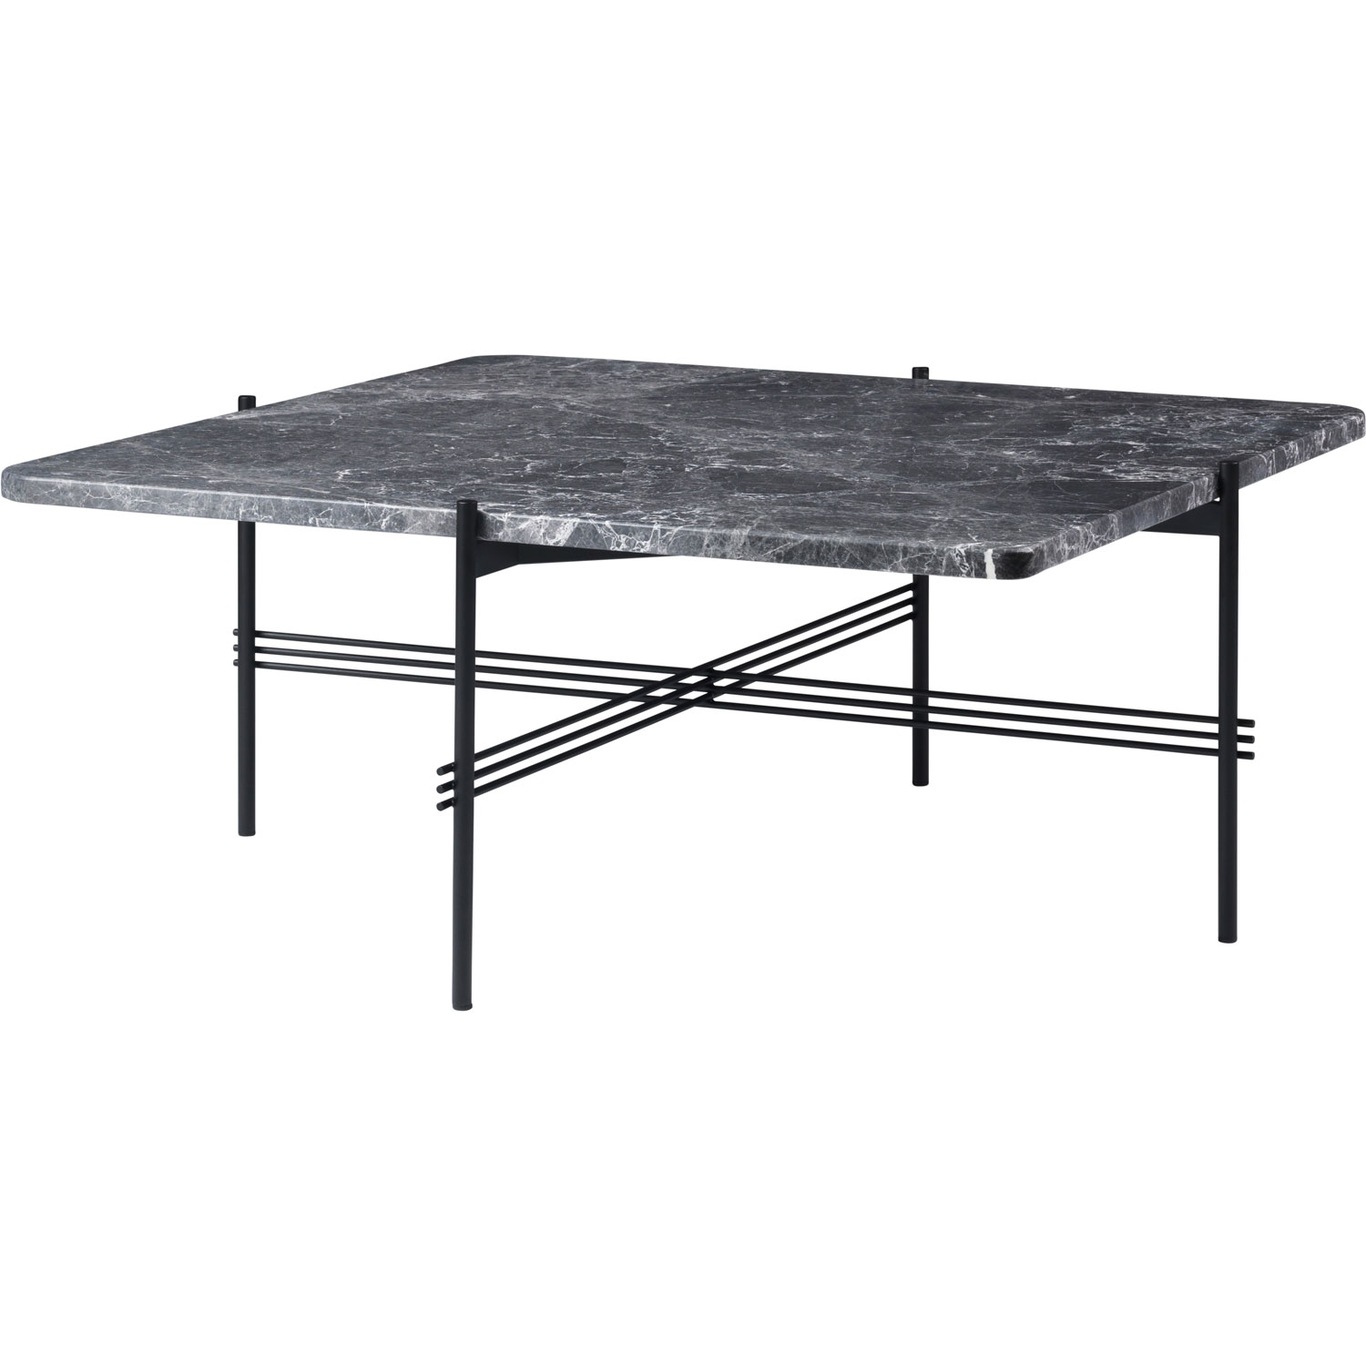 TS 80x80 Coffee Table, Black / Grey Marble